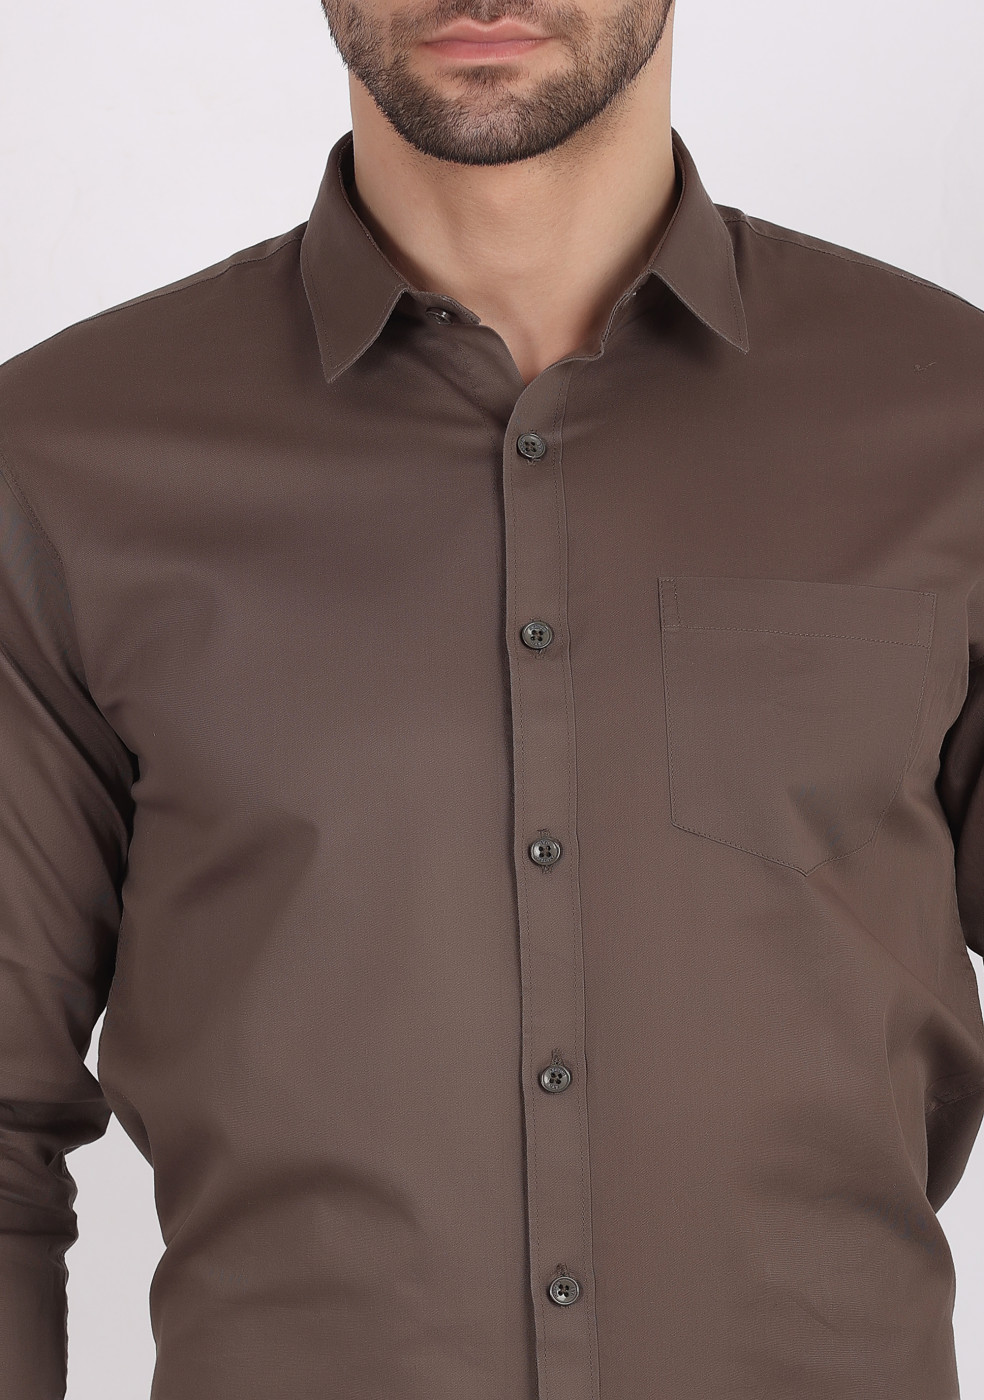 ASHTOM Plain BMW 100% Cotton Shirt For Men